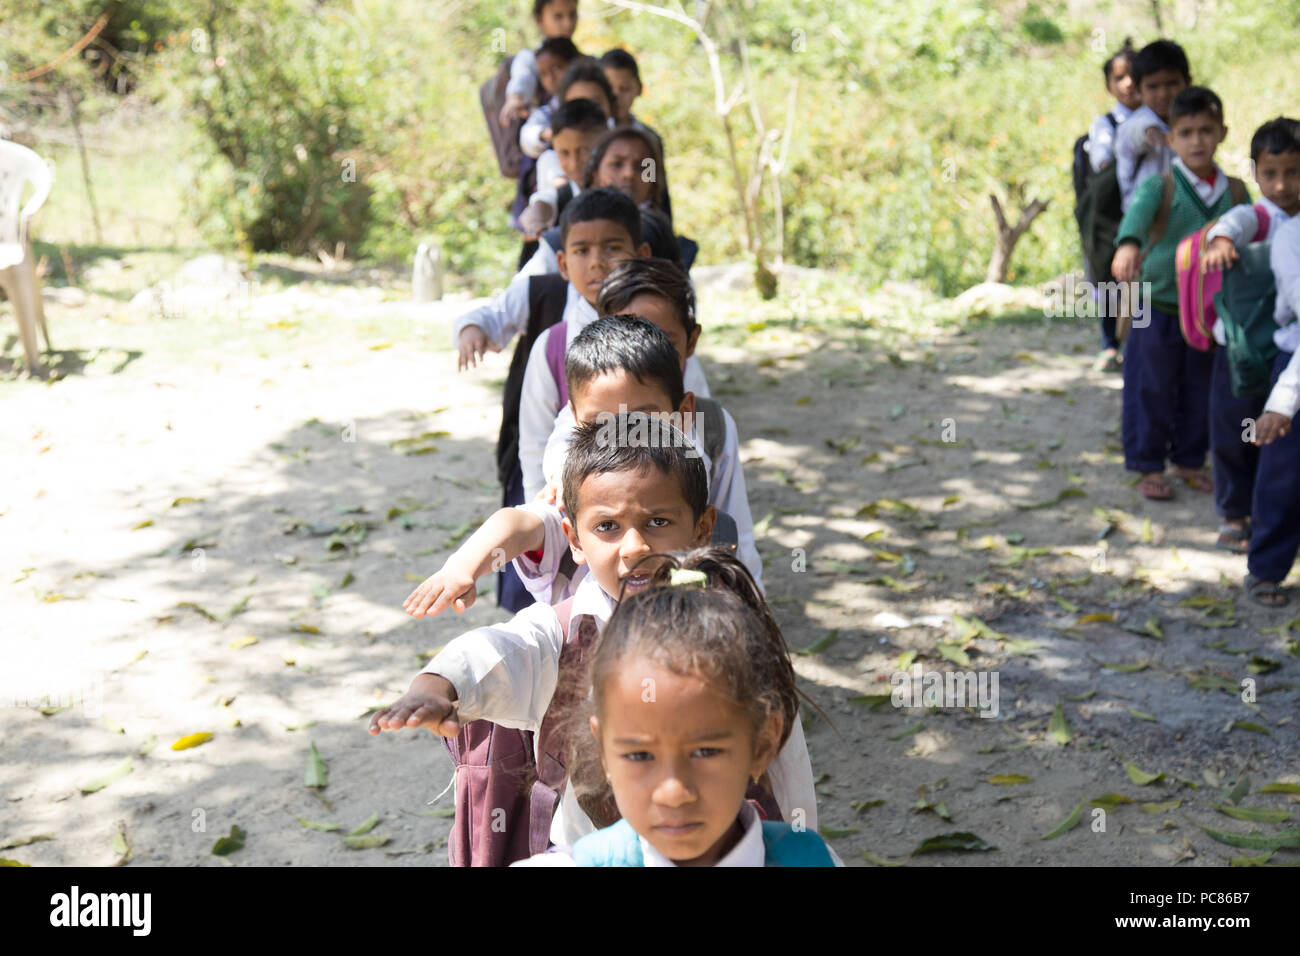 Village elementary school kids forming line for morning prayer. different age group children wearing school uniform. Stock Photo